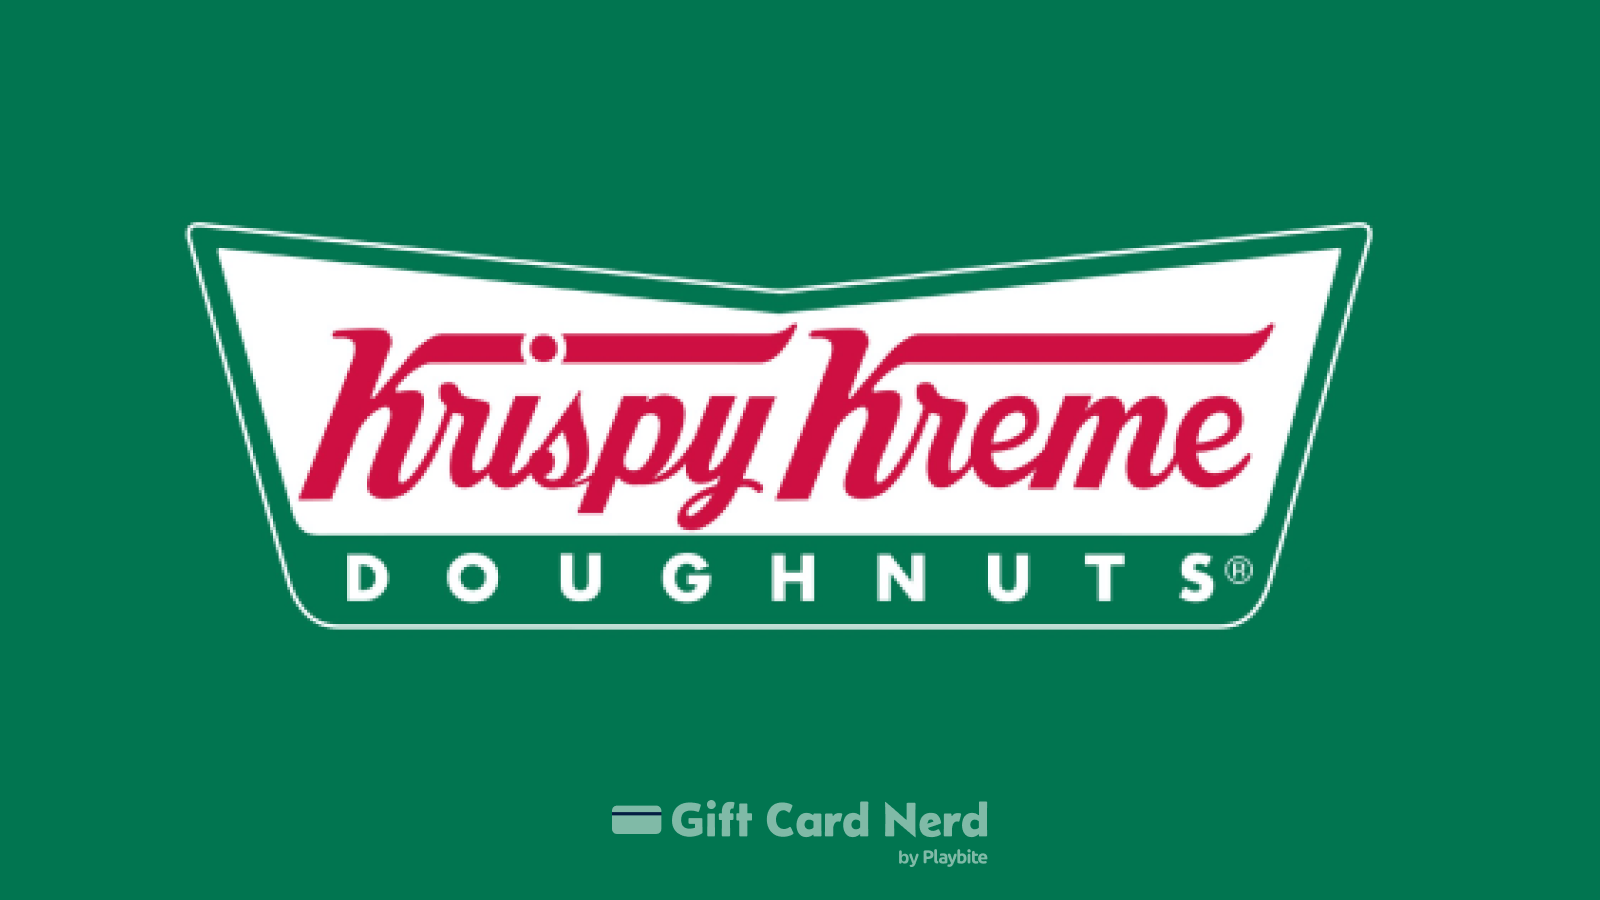 Can I Use a Krispy Kreme Gift Card on Amazon?